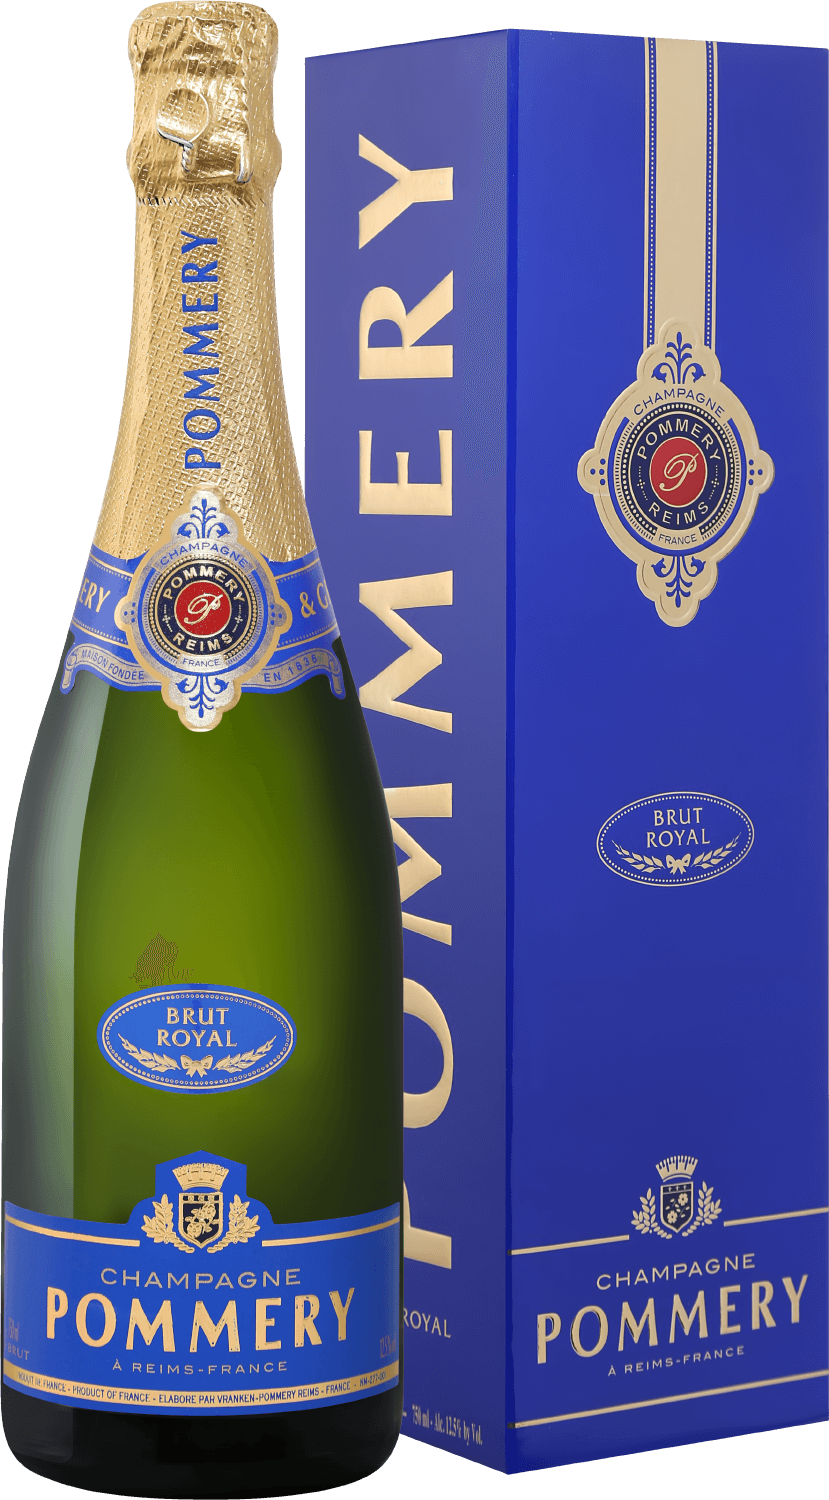 Pommery Brut Royal Champagne AOP (gift box) drappier carte d’or brut champagne aop in gift box with two glasses